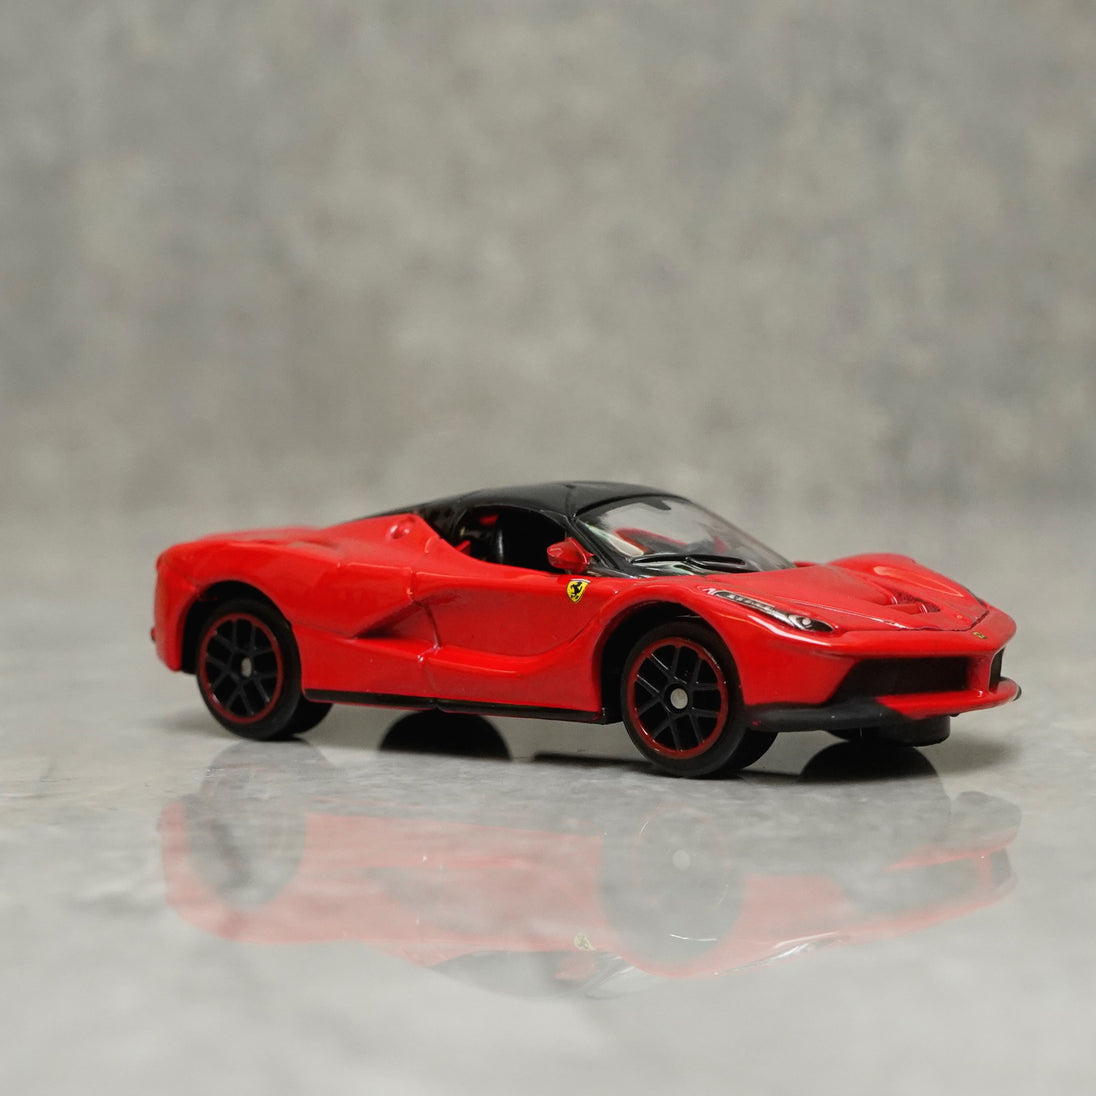 2013 Ferrari Laferrari Red 1:64 Diecast Car Model by Bburago